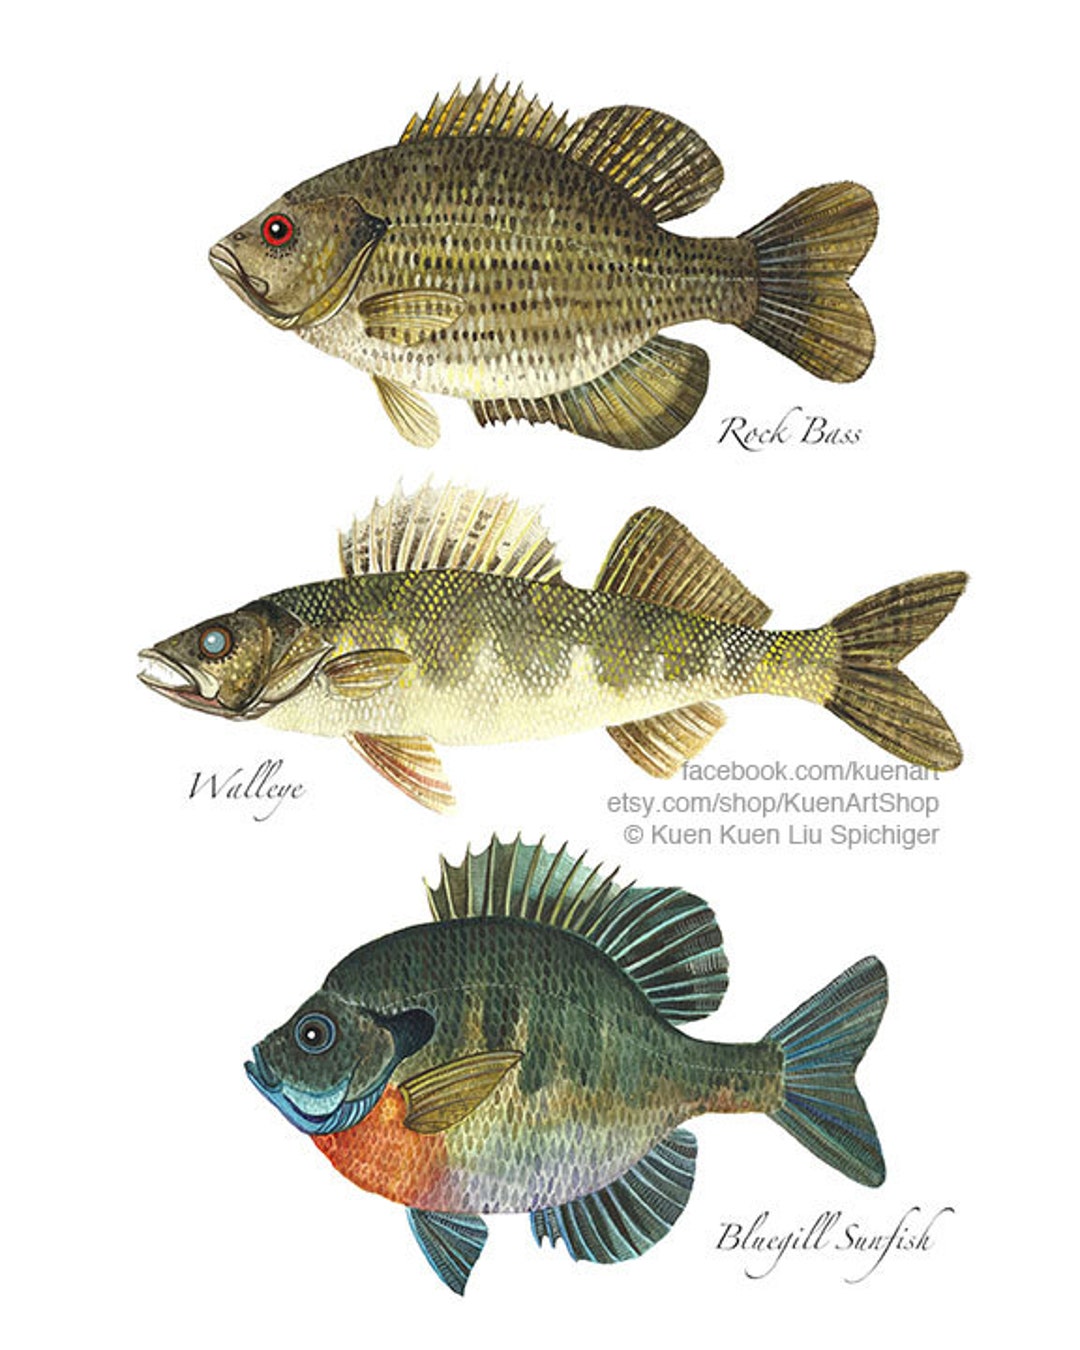 Rock Bass Walleye Bluegill Sunfish Art Print, Freshwater Fish, River Fish,  Watercolor Painting, Home Wall Decoration Pennsylvania Fish -  Canada